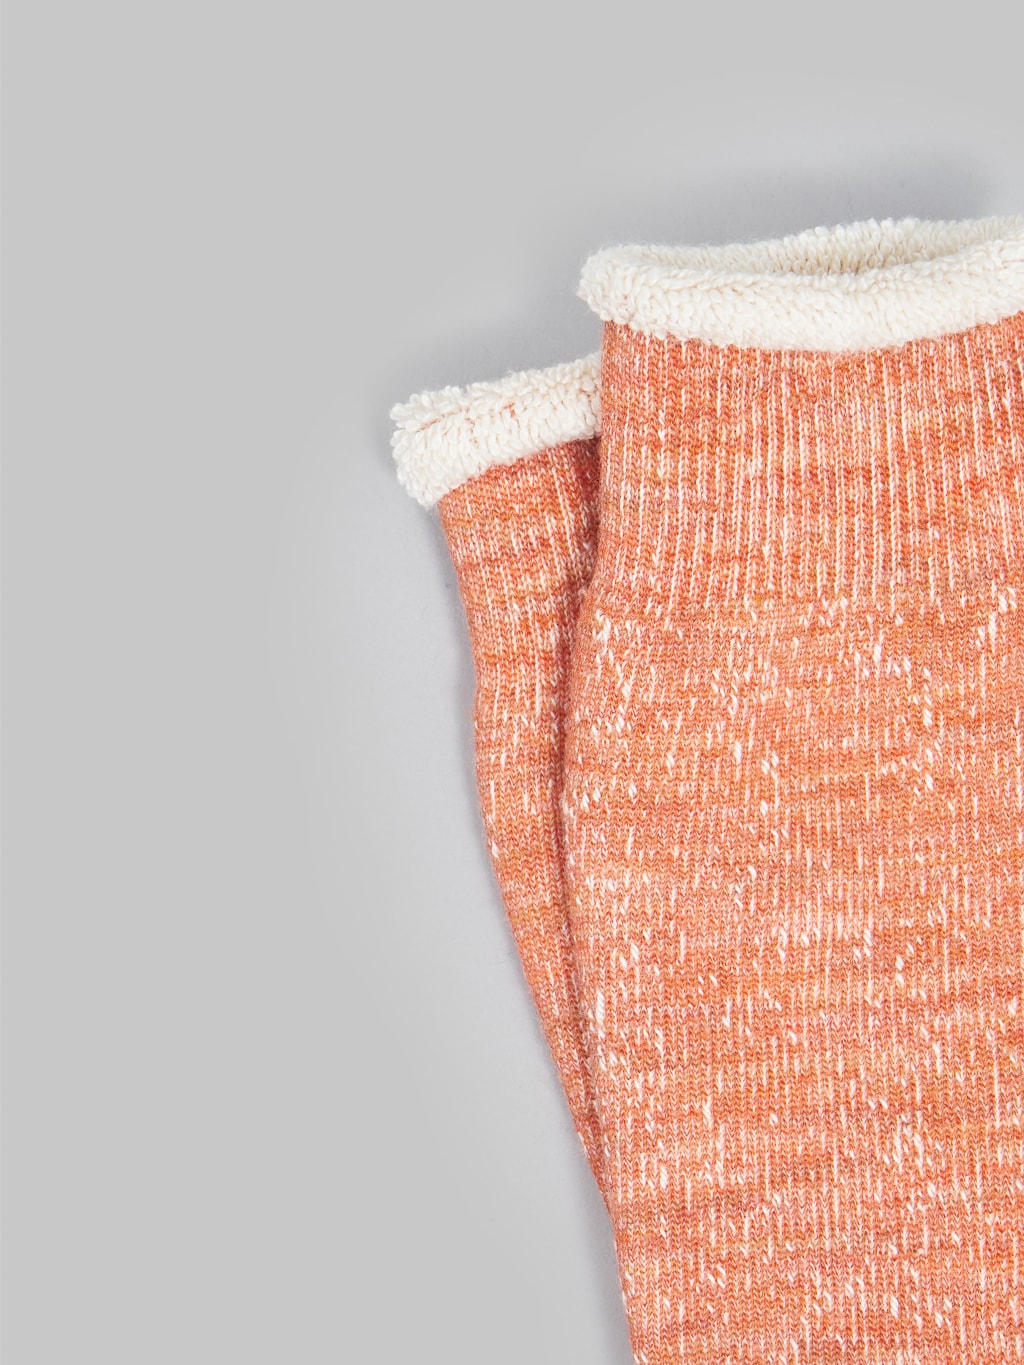 ROTOTO Double Face Crew Socks "Merino Wool & Organic Cotton" Orange